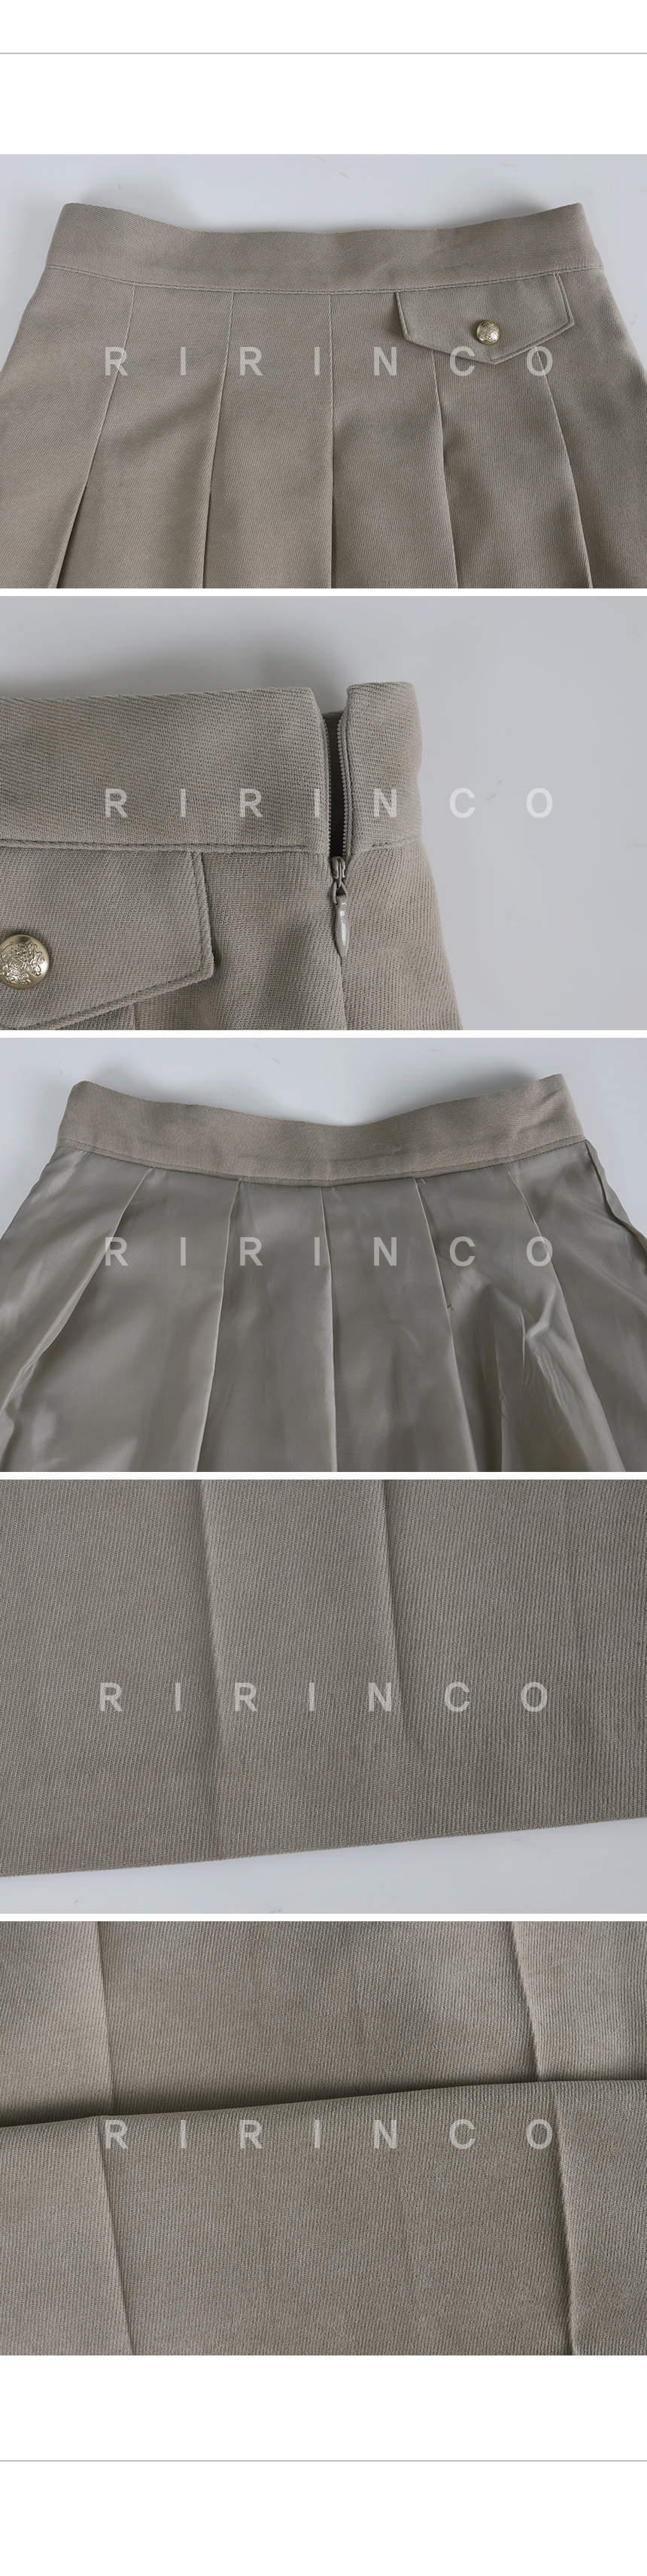 RIRINCO 起毛ゴールドボタンポケット付きプリーツスカート